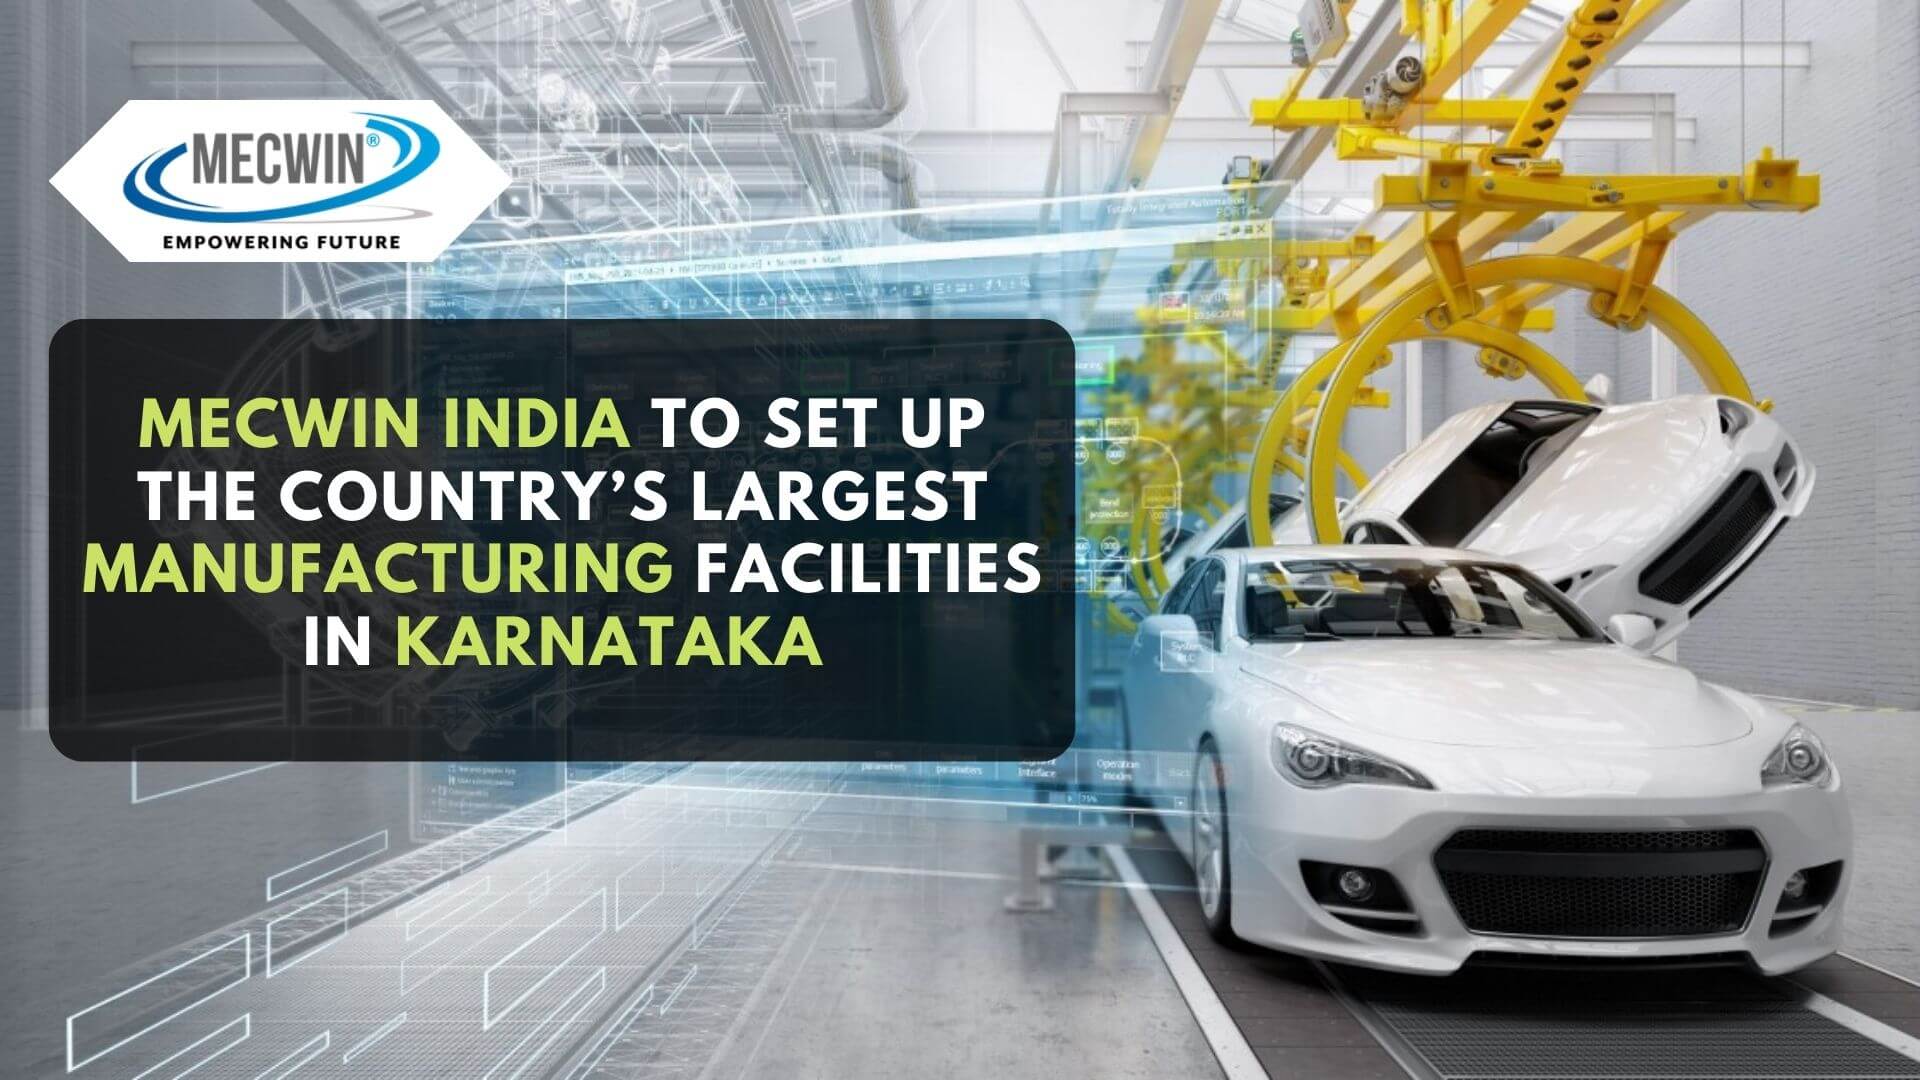 https://e-vehicleinfo.com/mecwin-india-set-up-country-largest-manufacturing-facilities-karnataka/